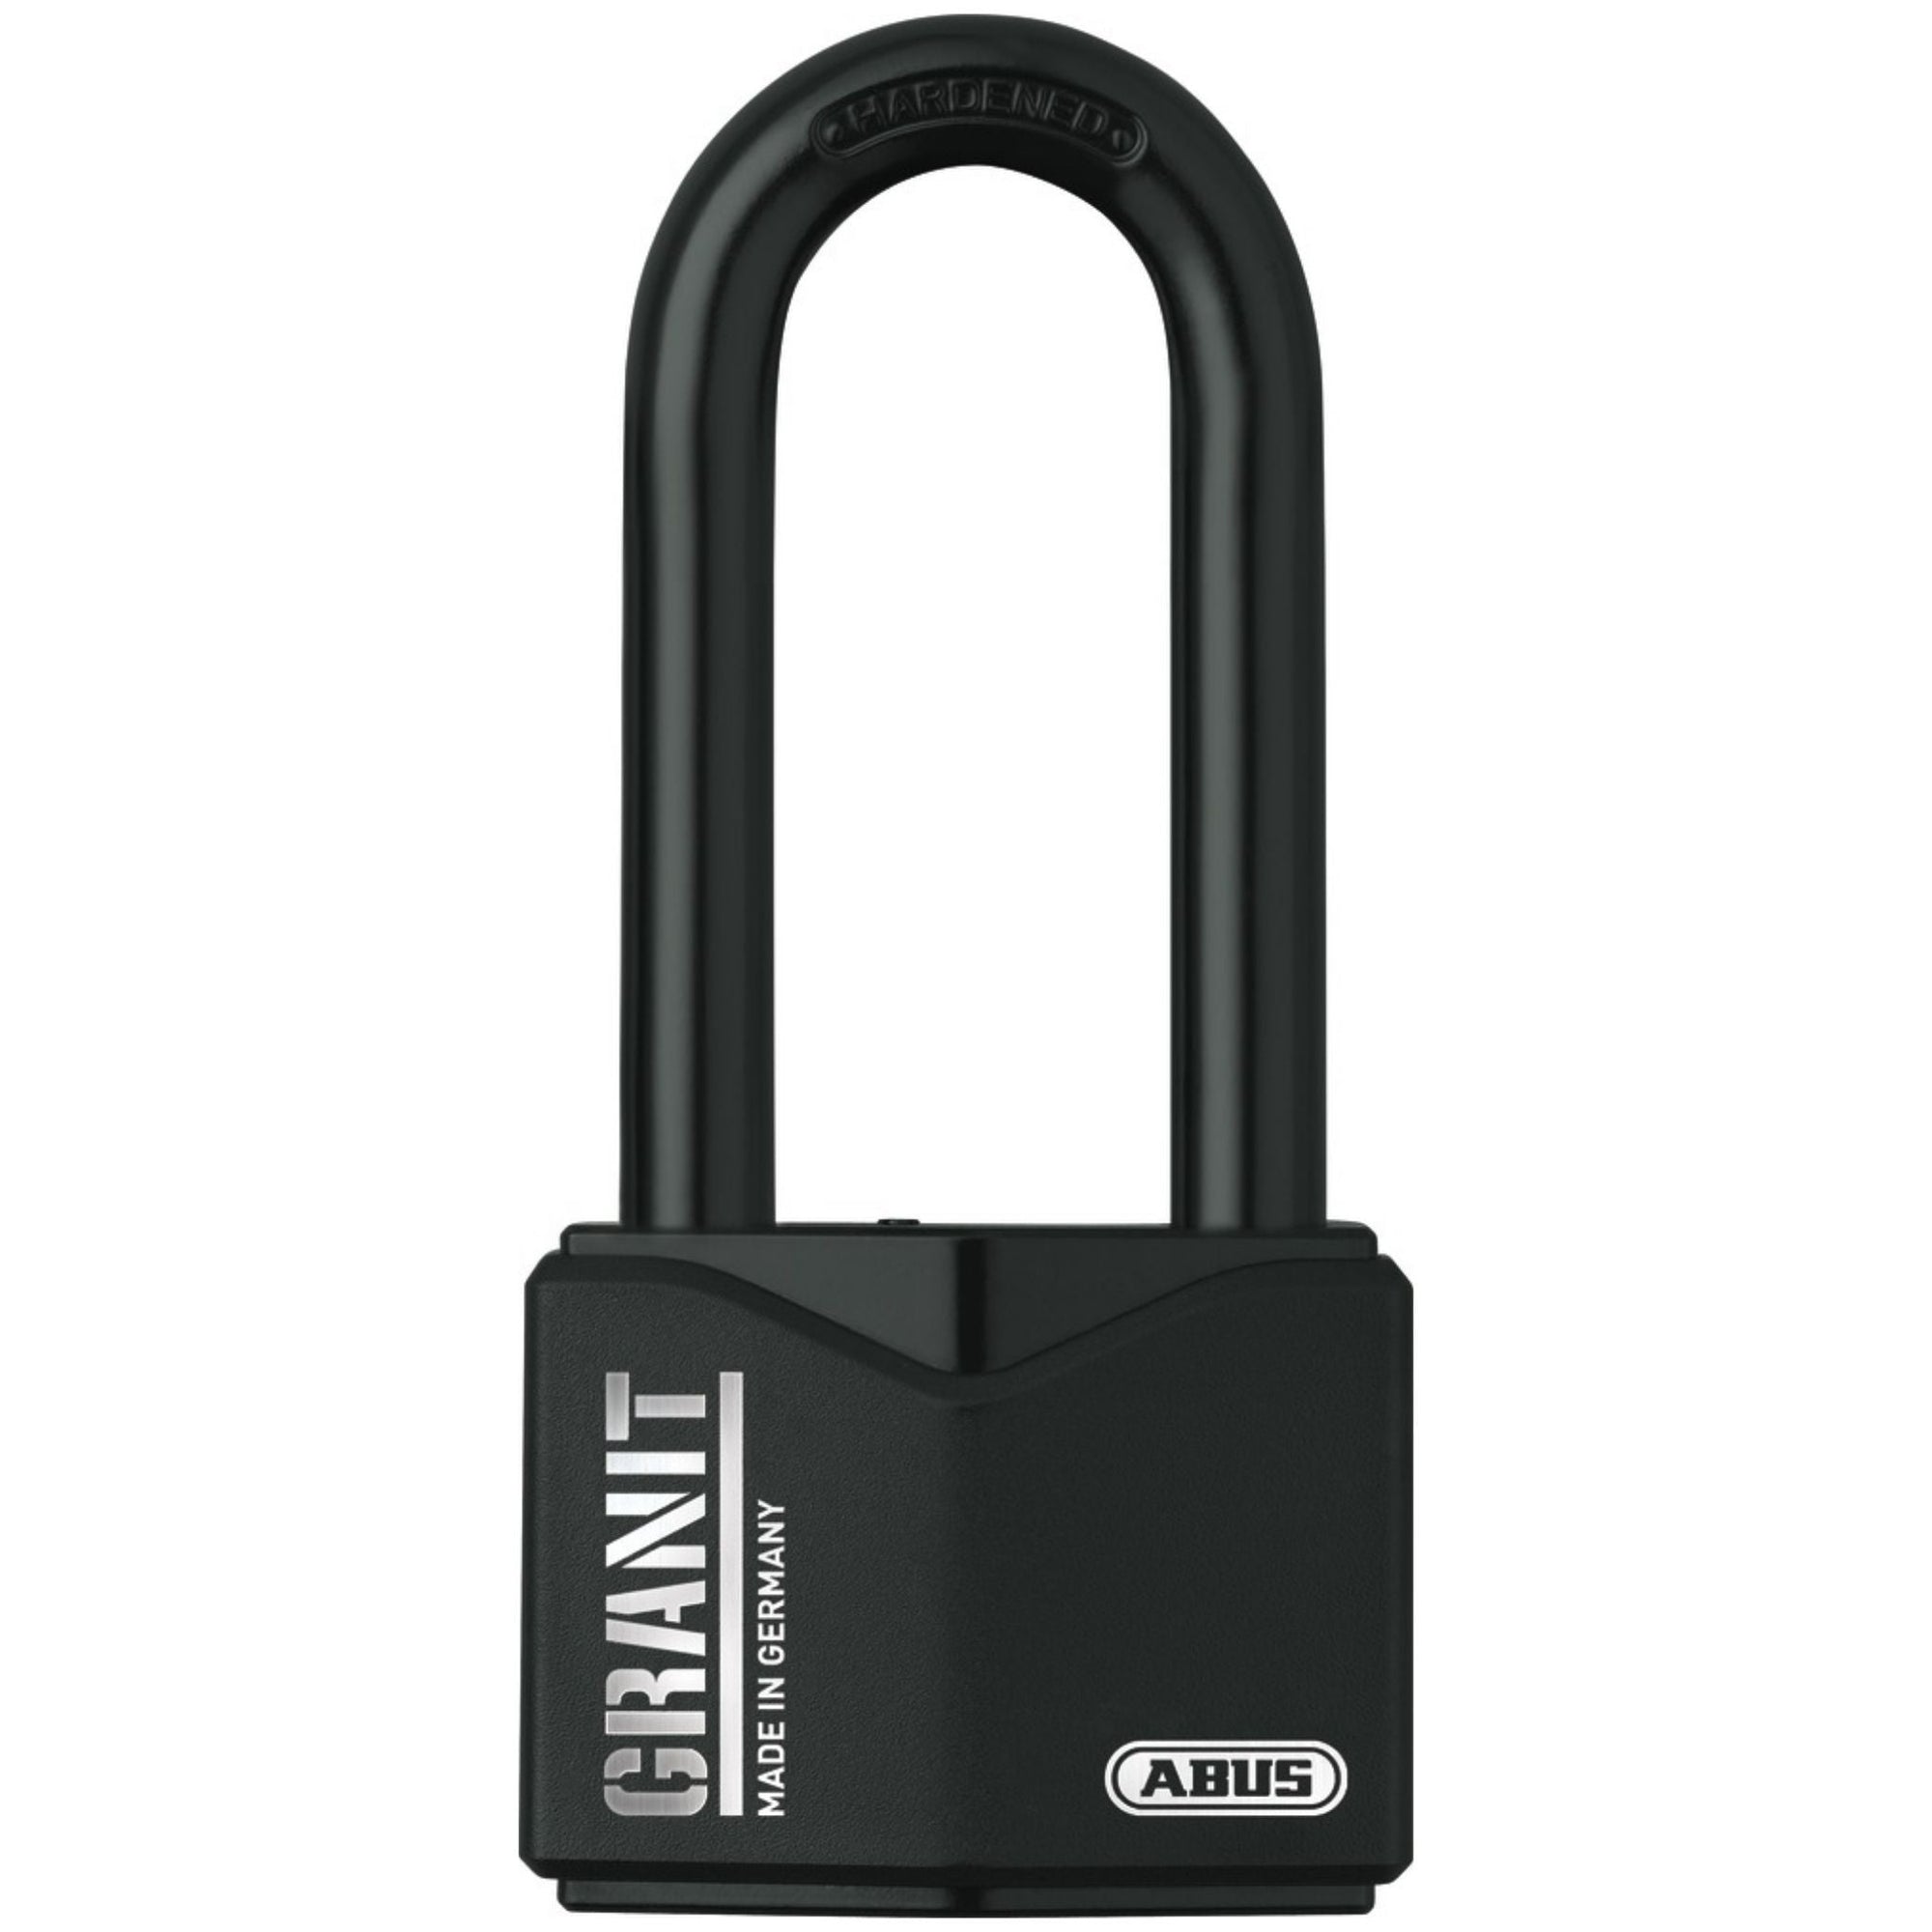 Abus 37/55HB75 KA 5544653 Granit Padlock Keyed Alike Locks with 3" Shackle Match to Existing Key# KA5544653 - The Lock Source